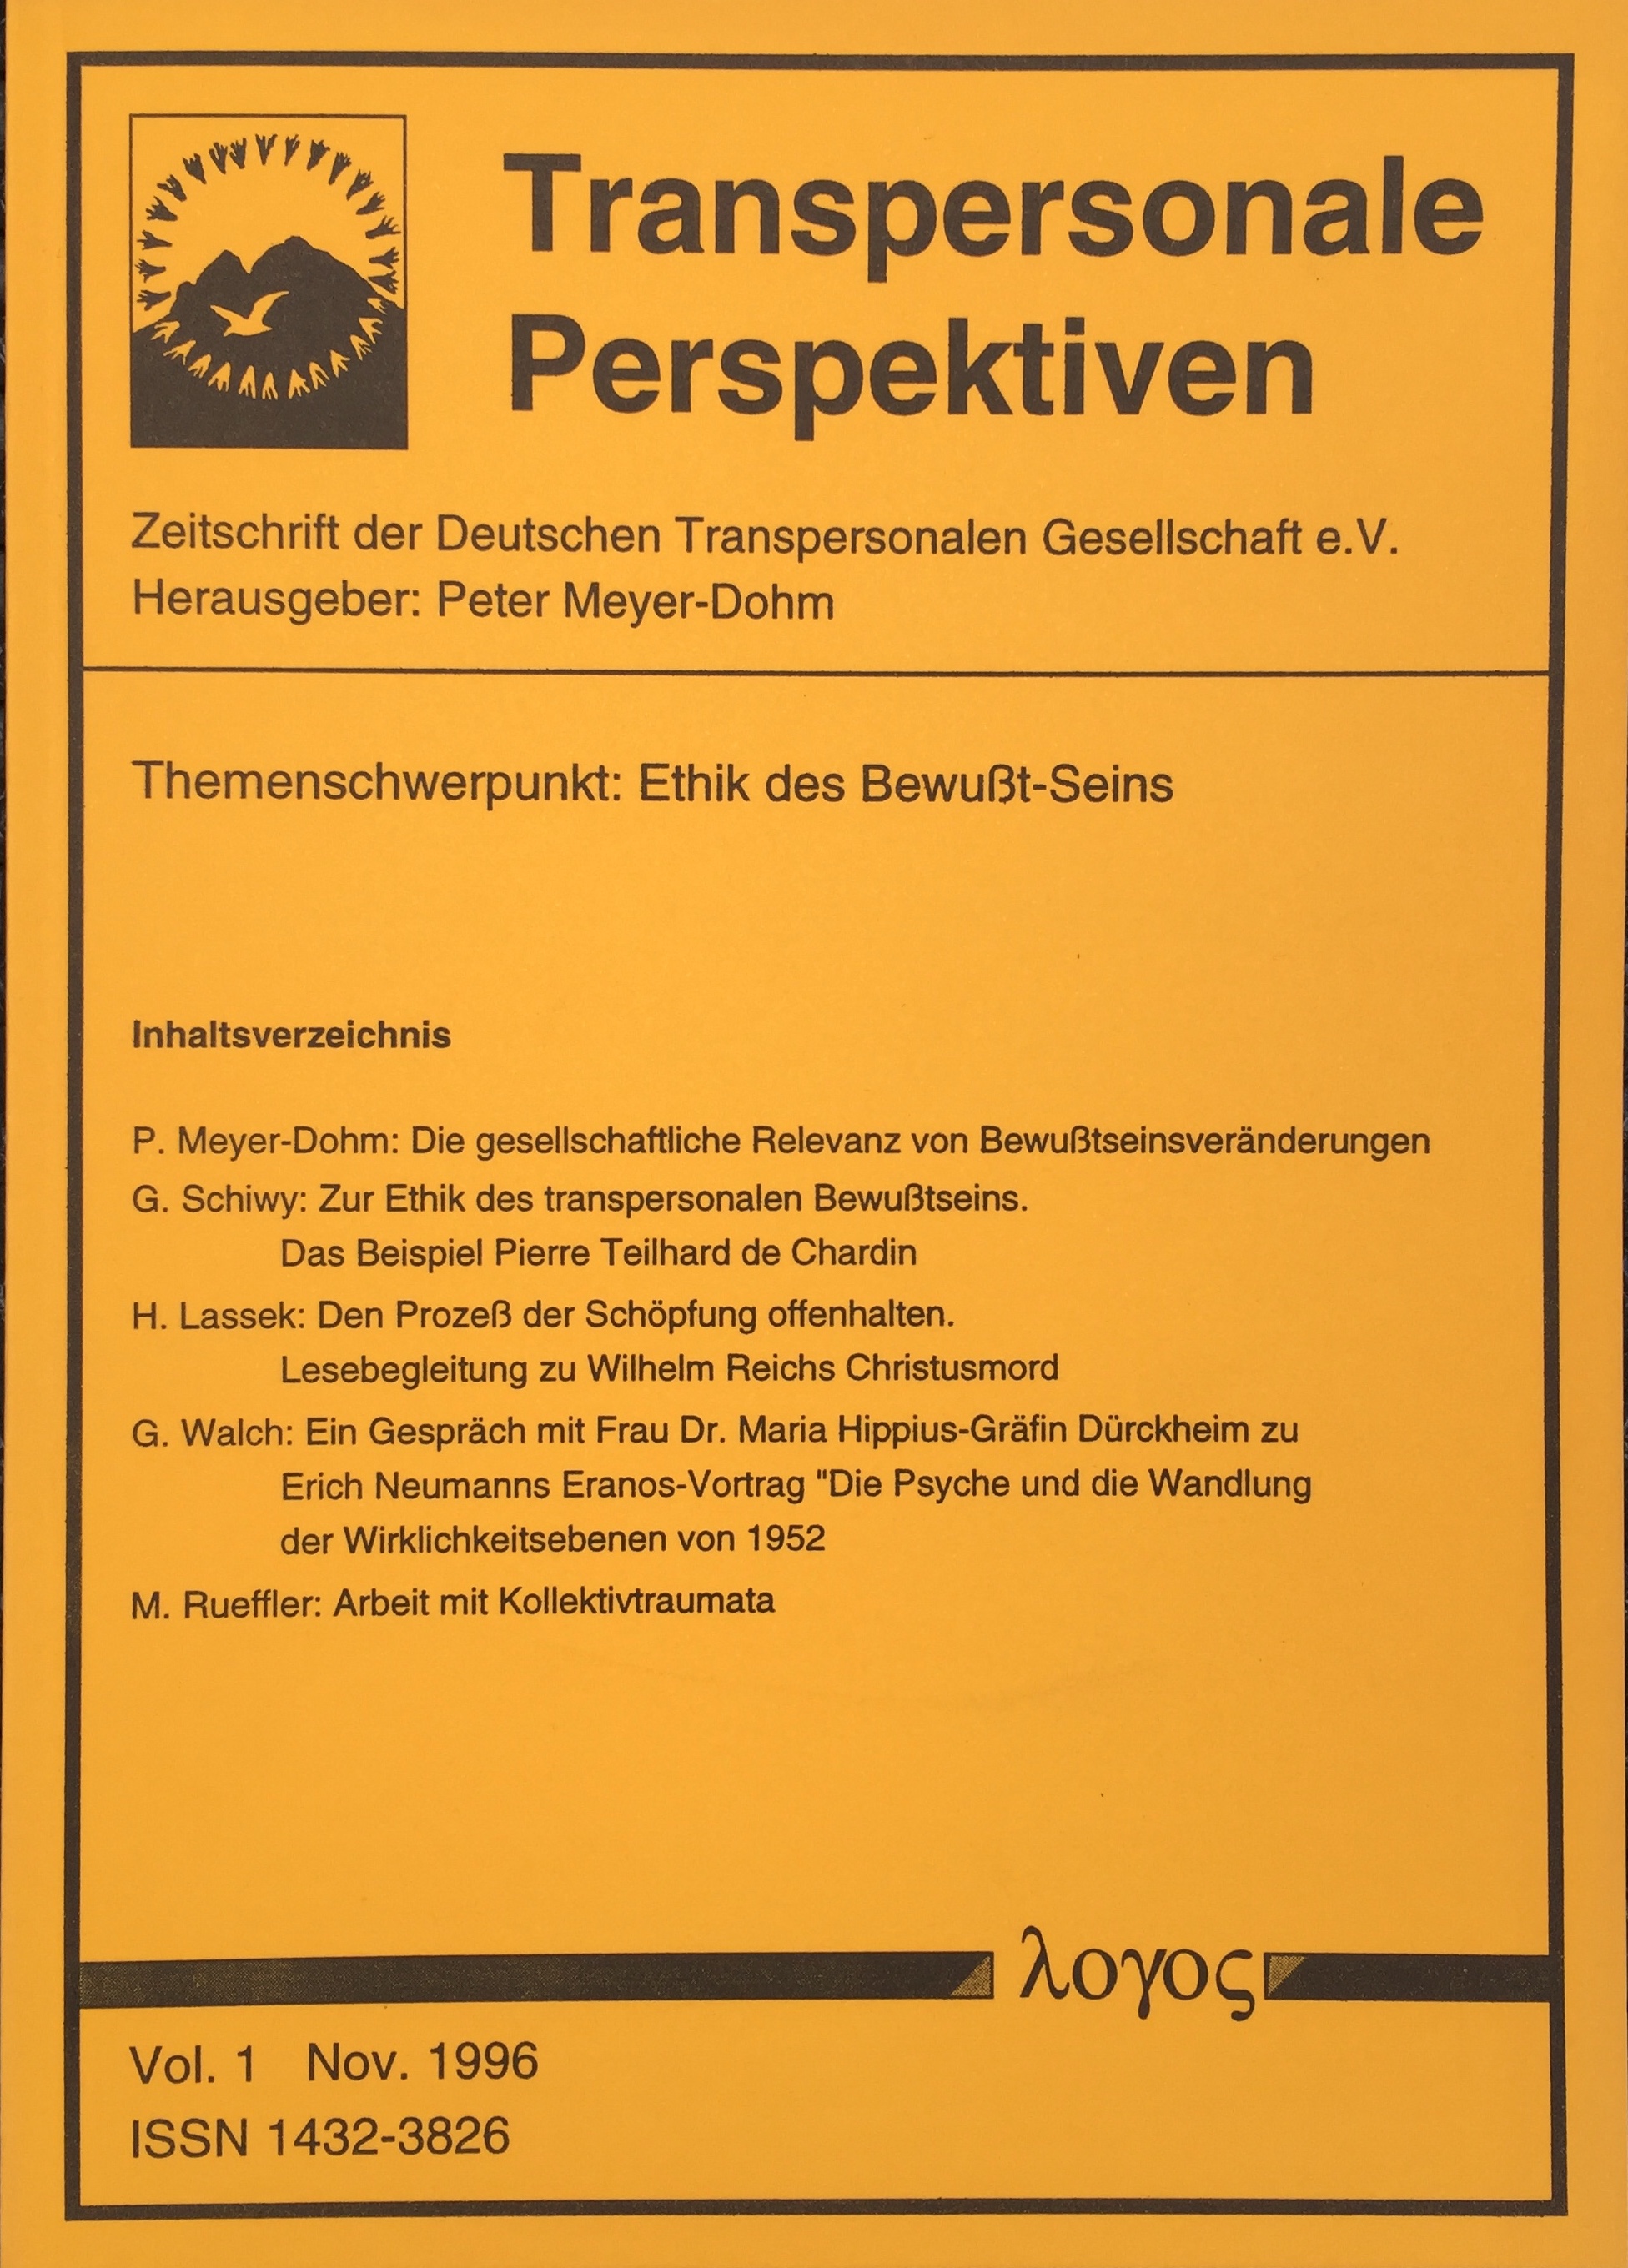 Transpersonale Perspektiven Volume 1/1996